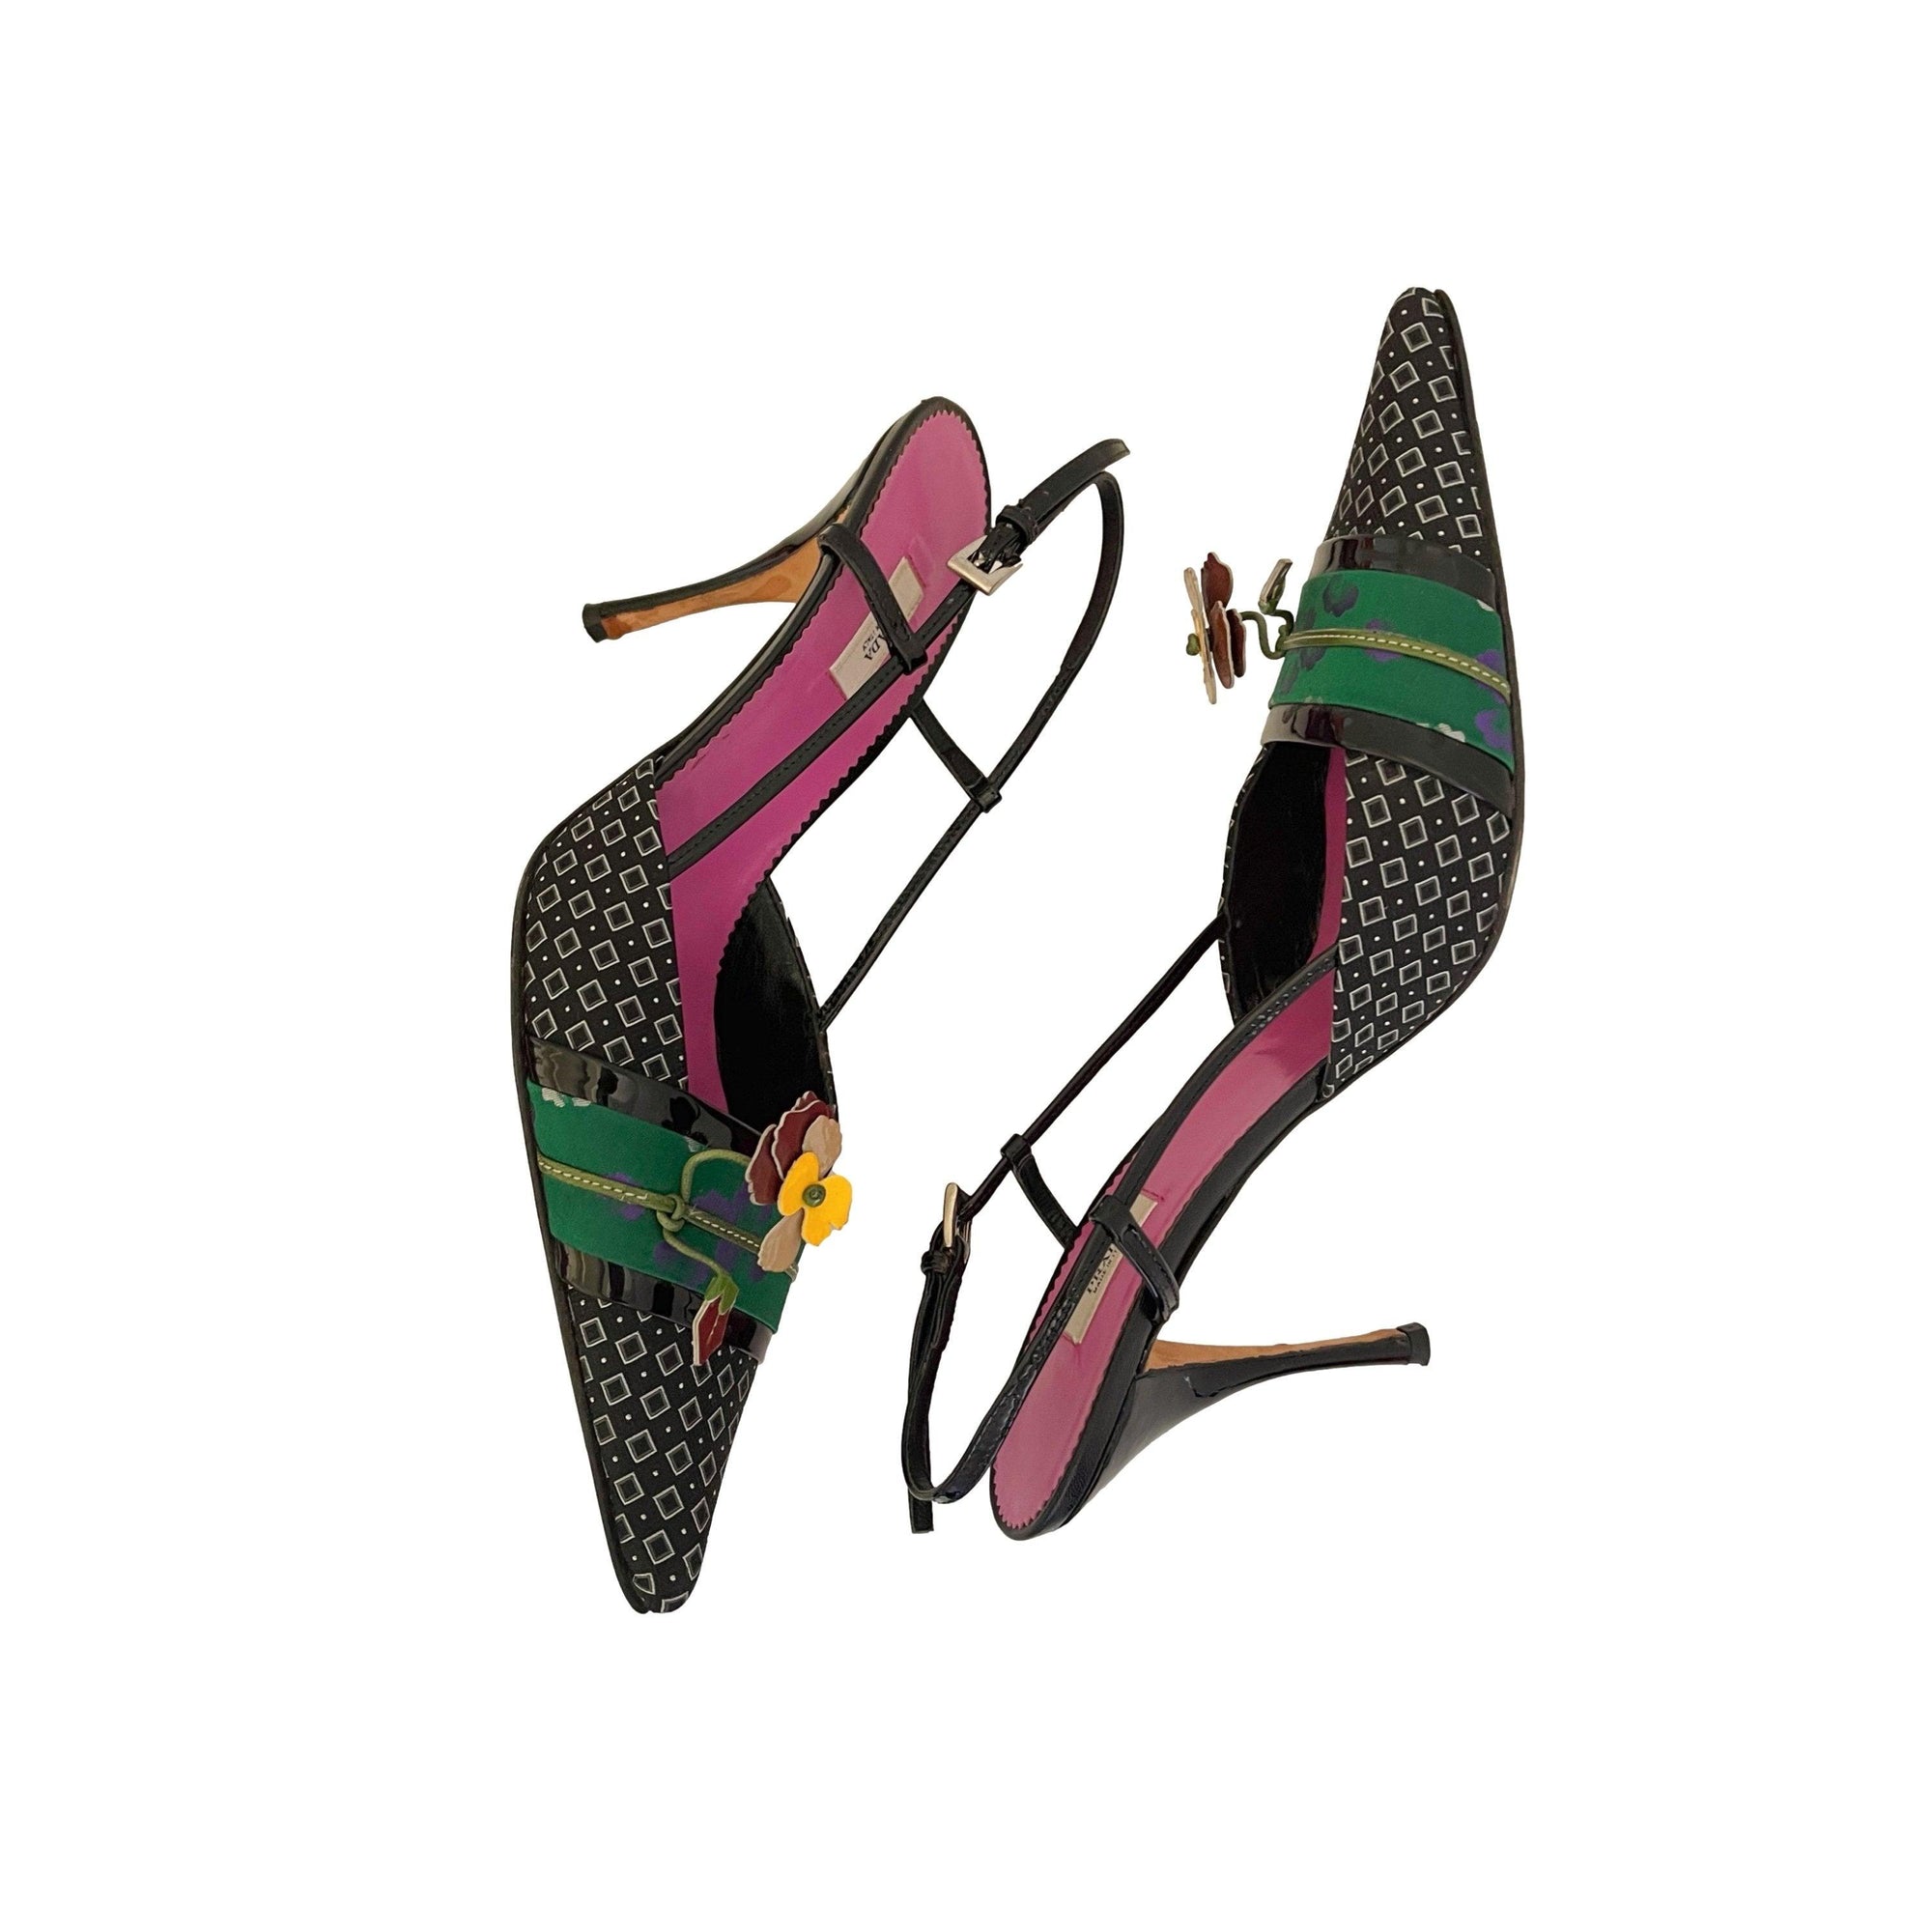 Prada Multicolor Floral Slingback Heels - Shoes